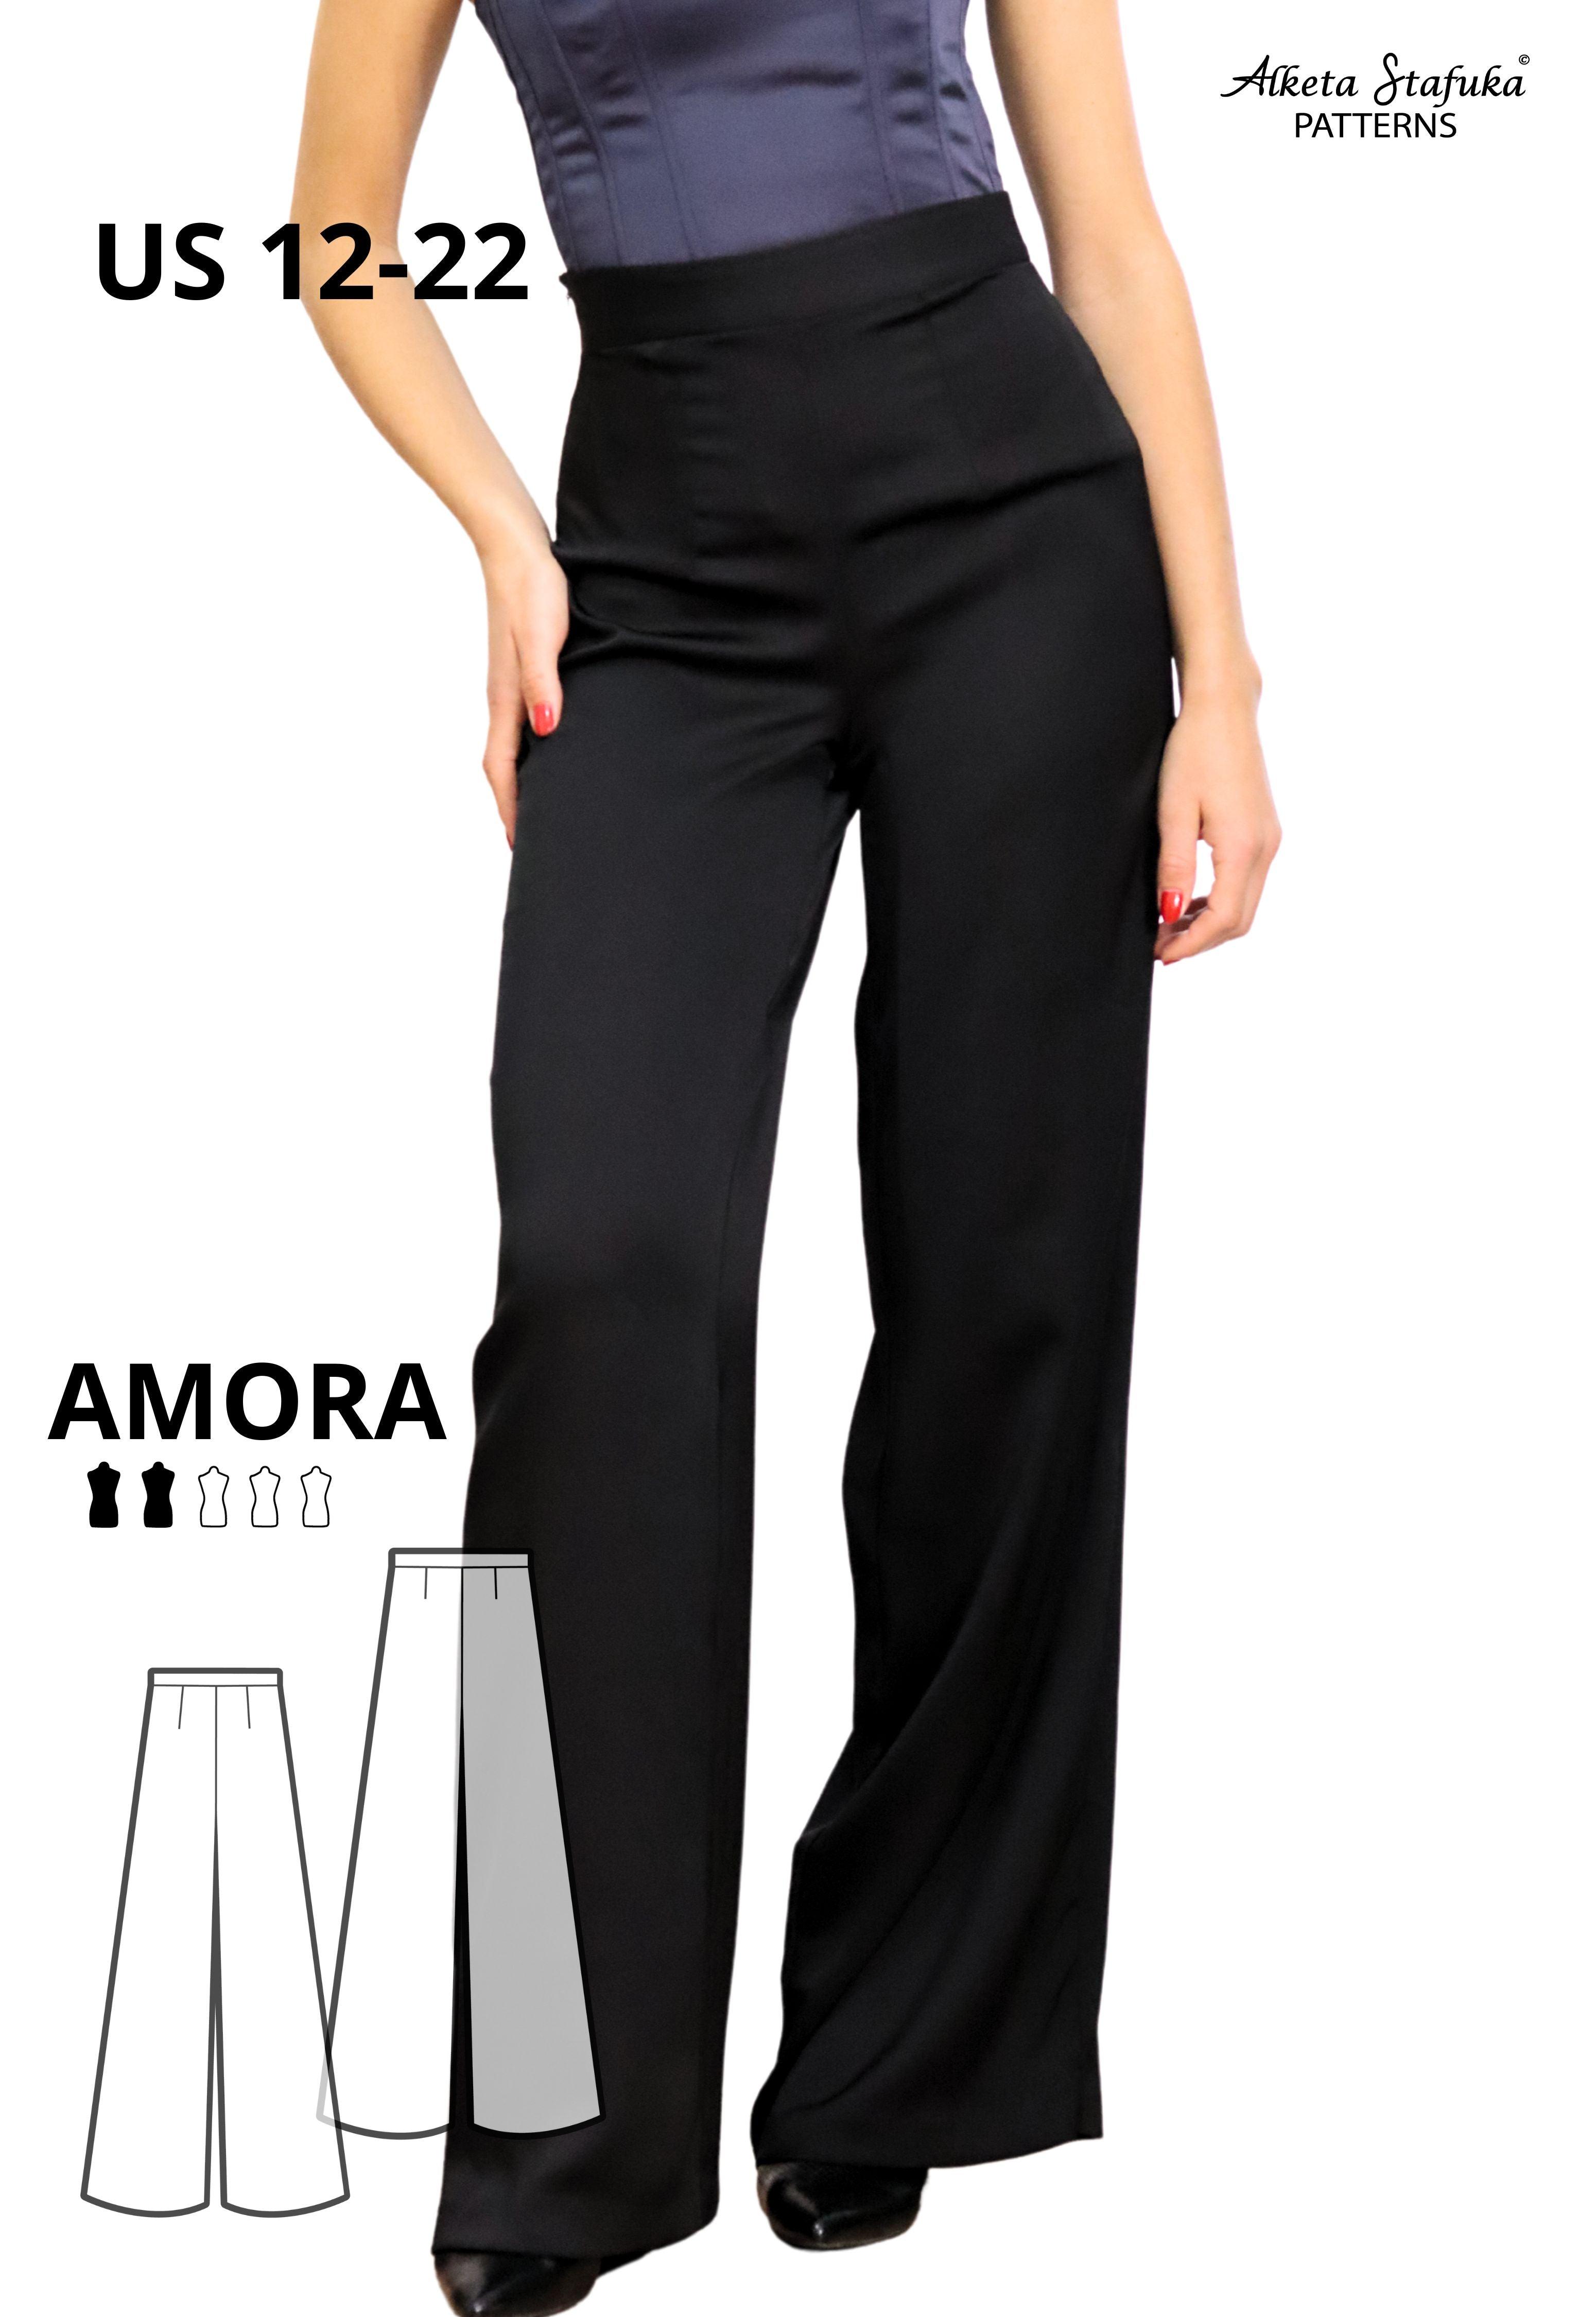 amora elegant palazzo pants plus size us 12 22 alketastafukapatterns 1 46583742497092